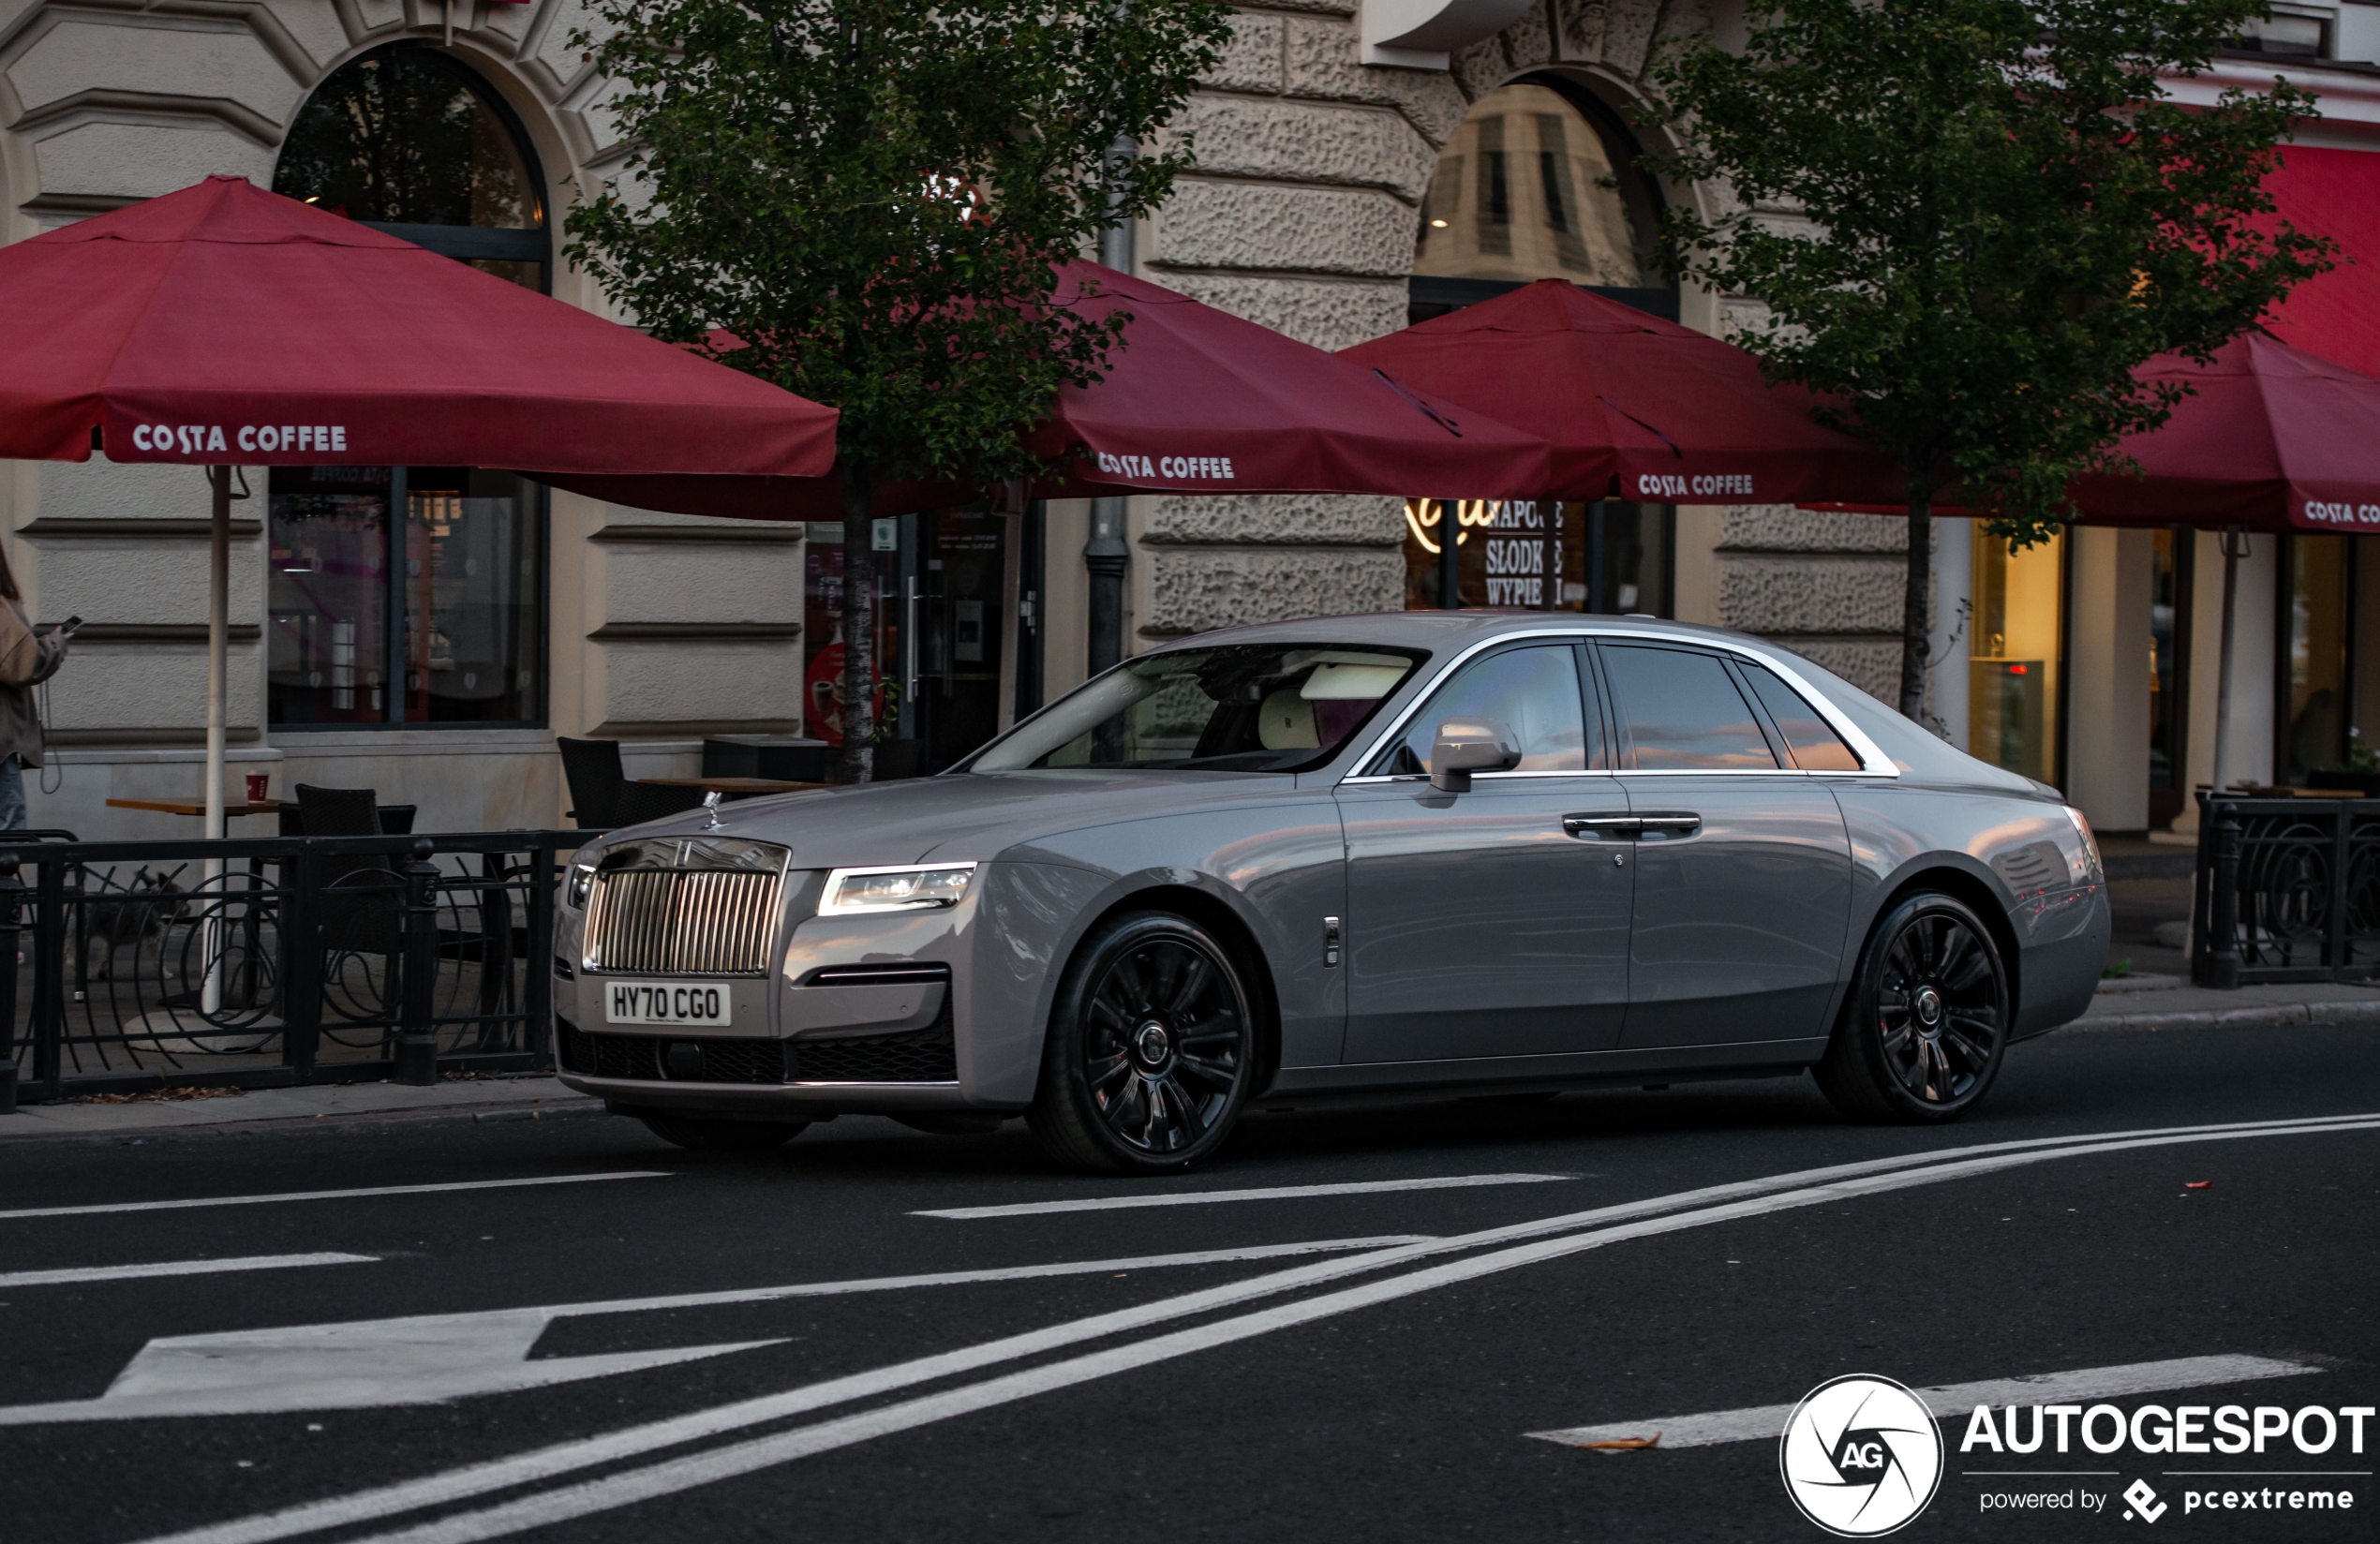 Nieuwe Rolls-Royce Ghost past perfect in het straatbeeld